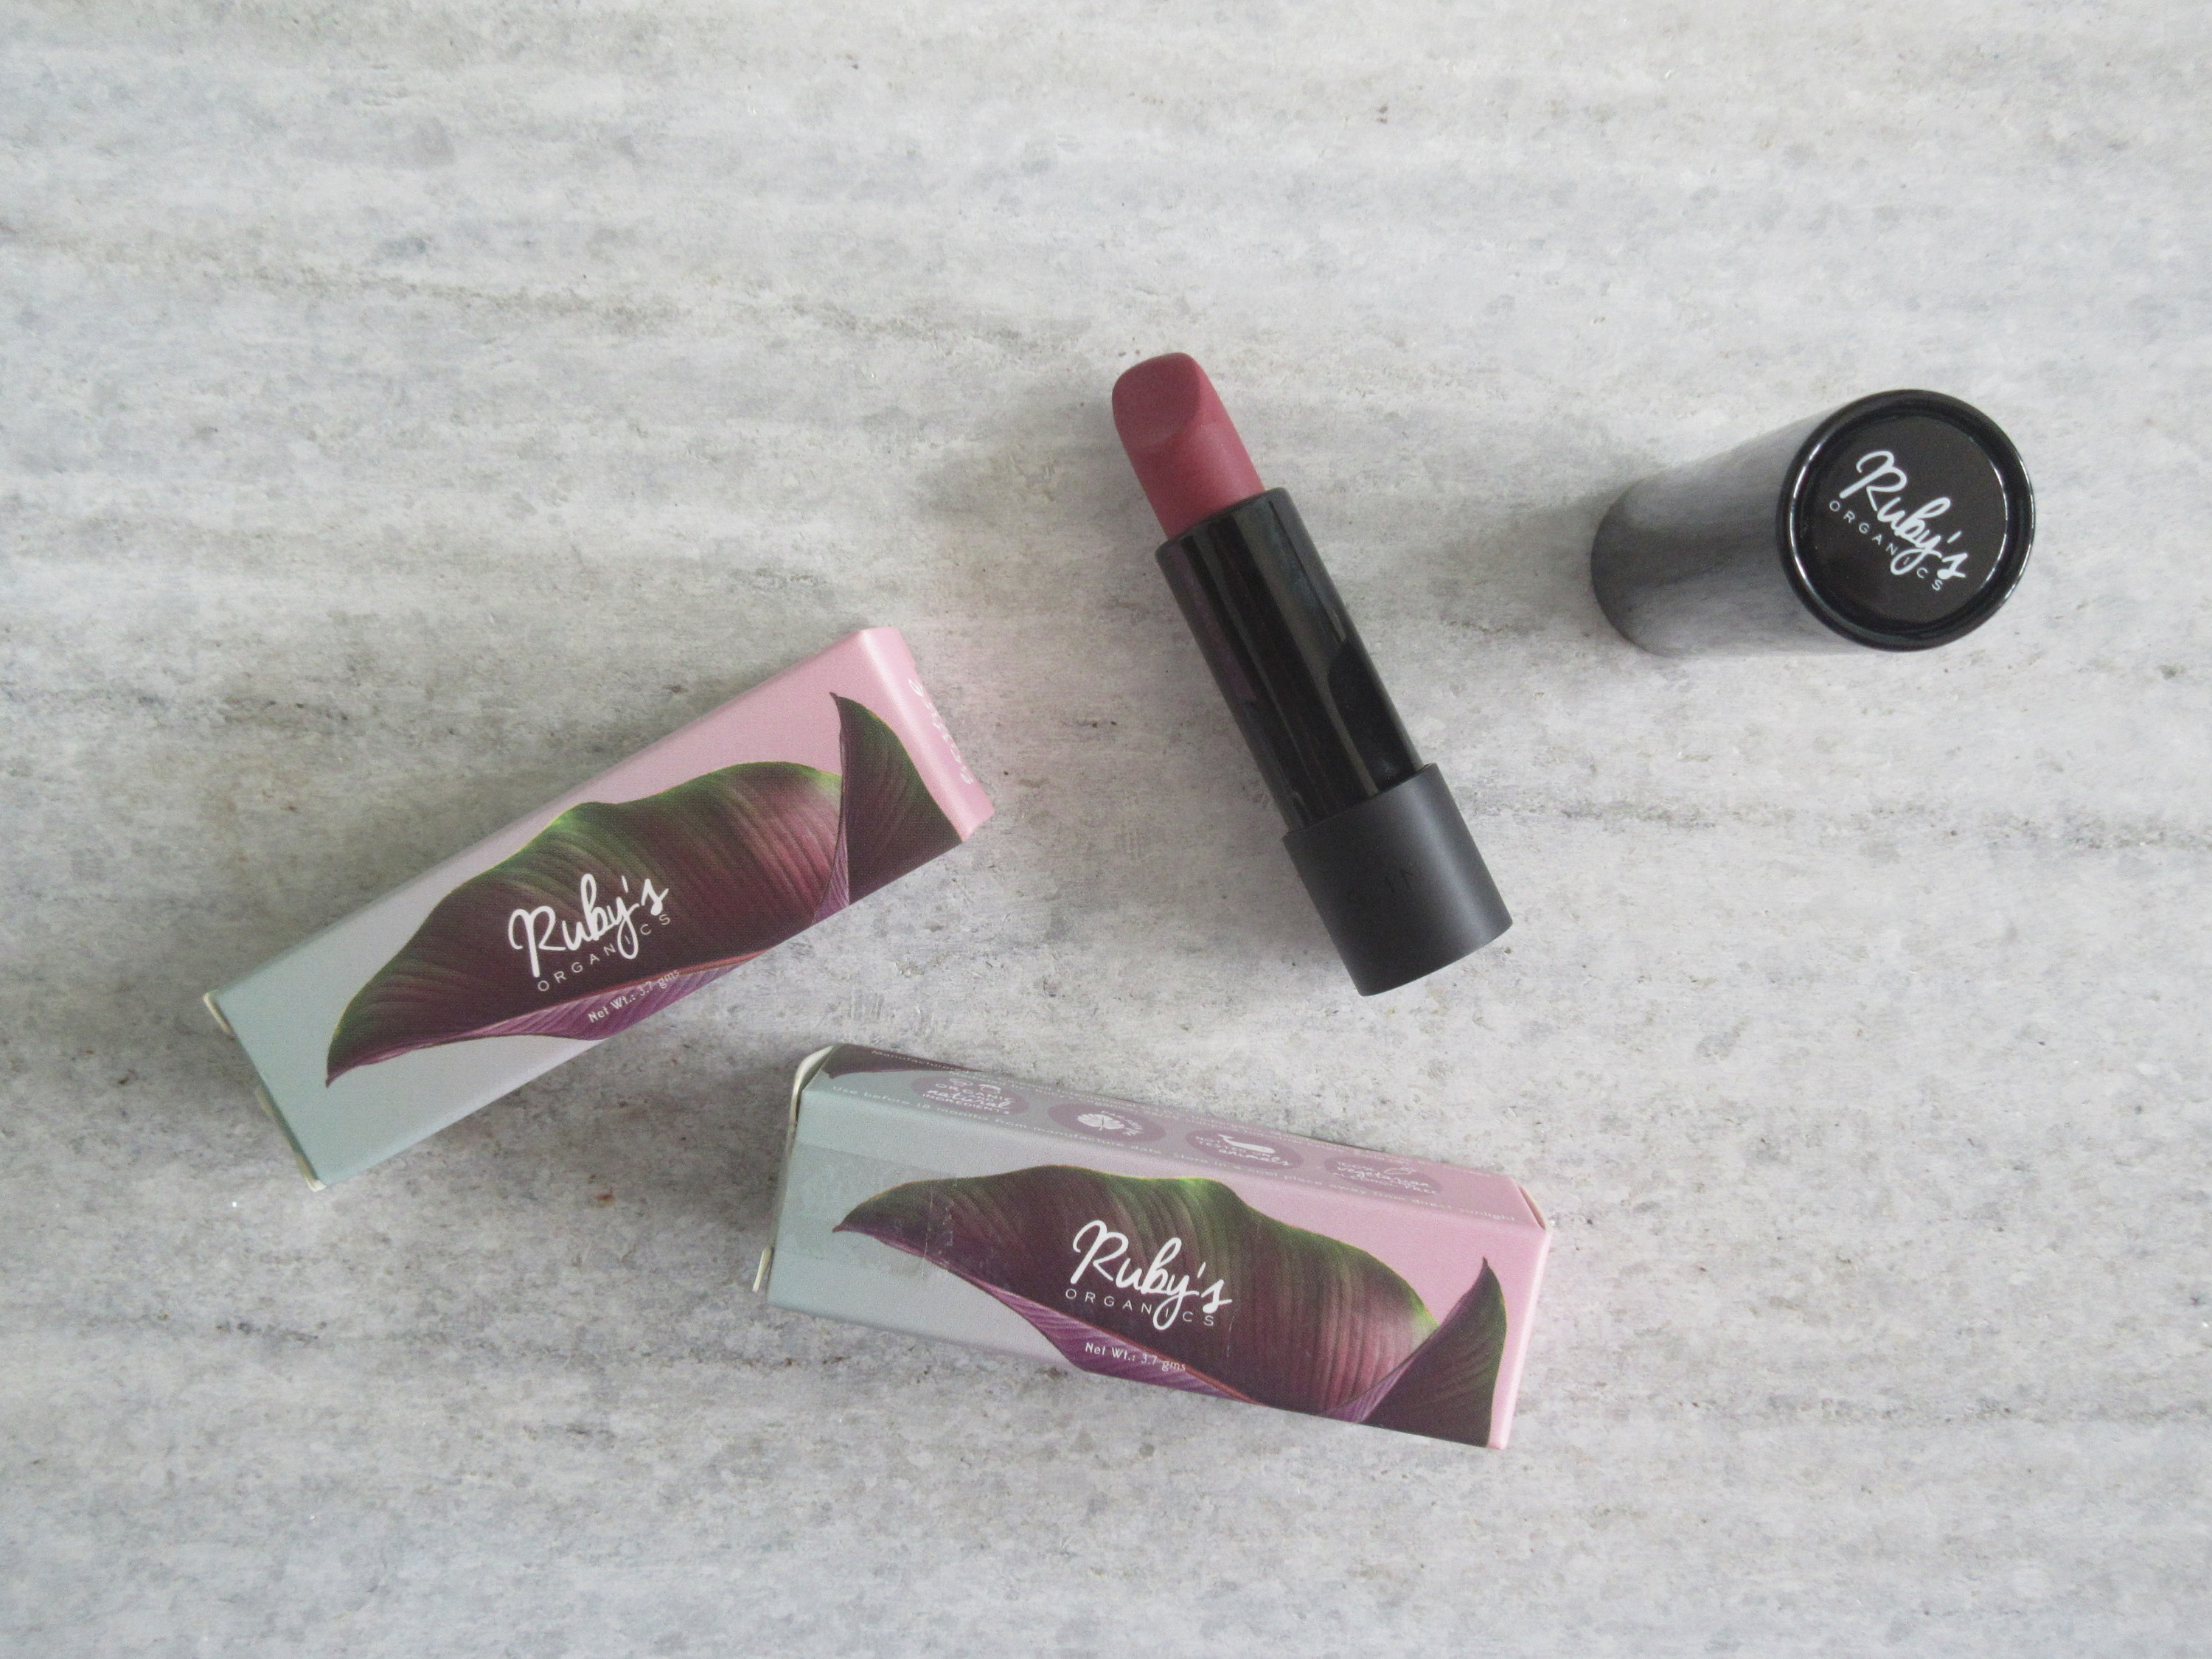 ruby's organics lipsticks, rubys organics lipstick mauve, rubys organics lipstick nuddy, rubys organics lipstick bare